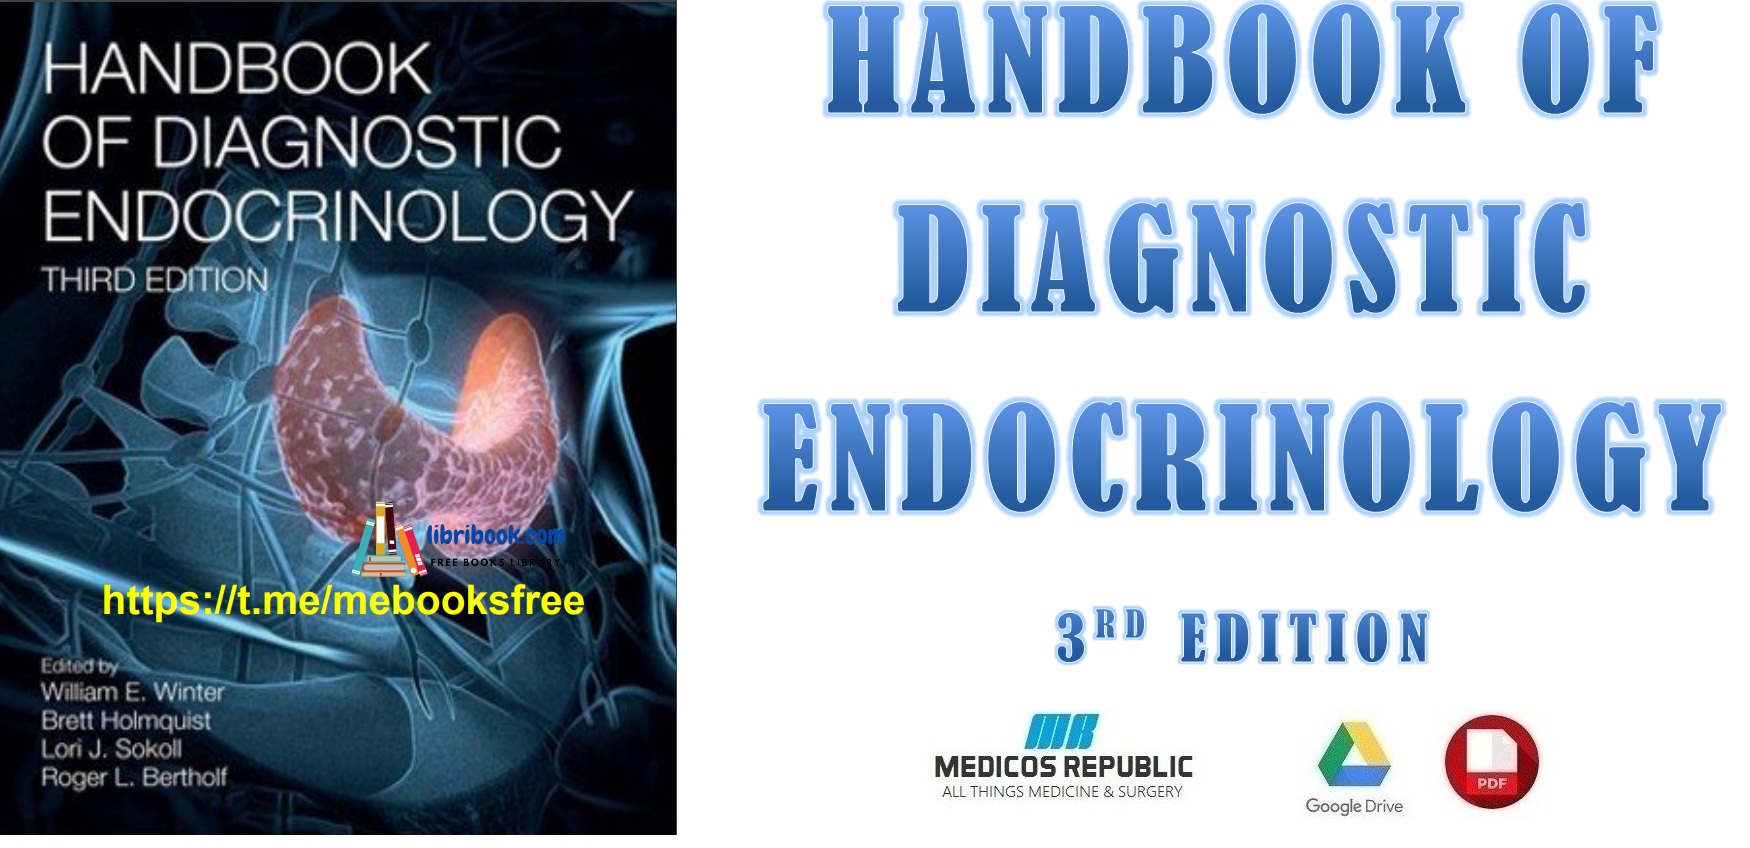 Handbook of Diagnostic Endocrinology 3rd Edition PDF